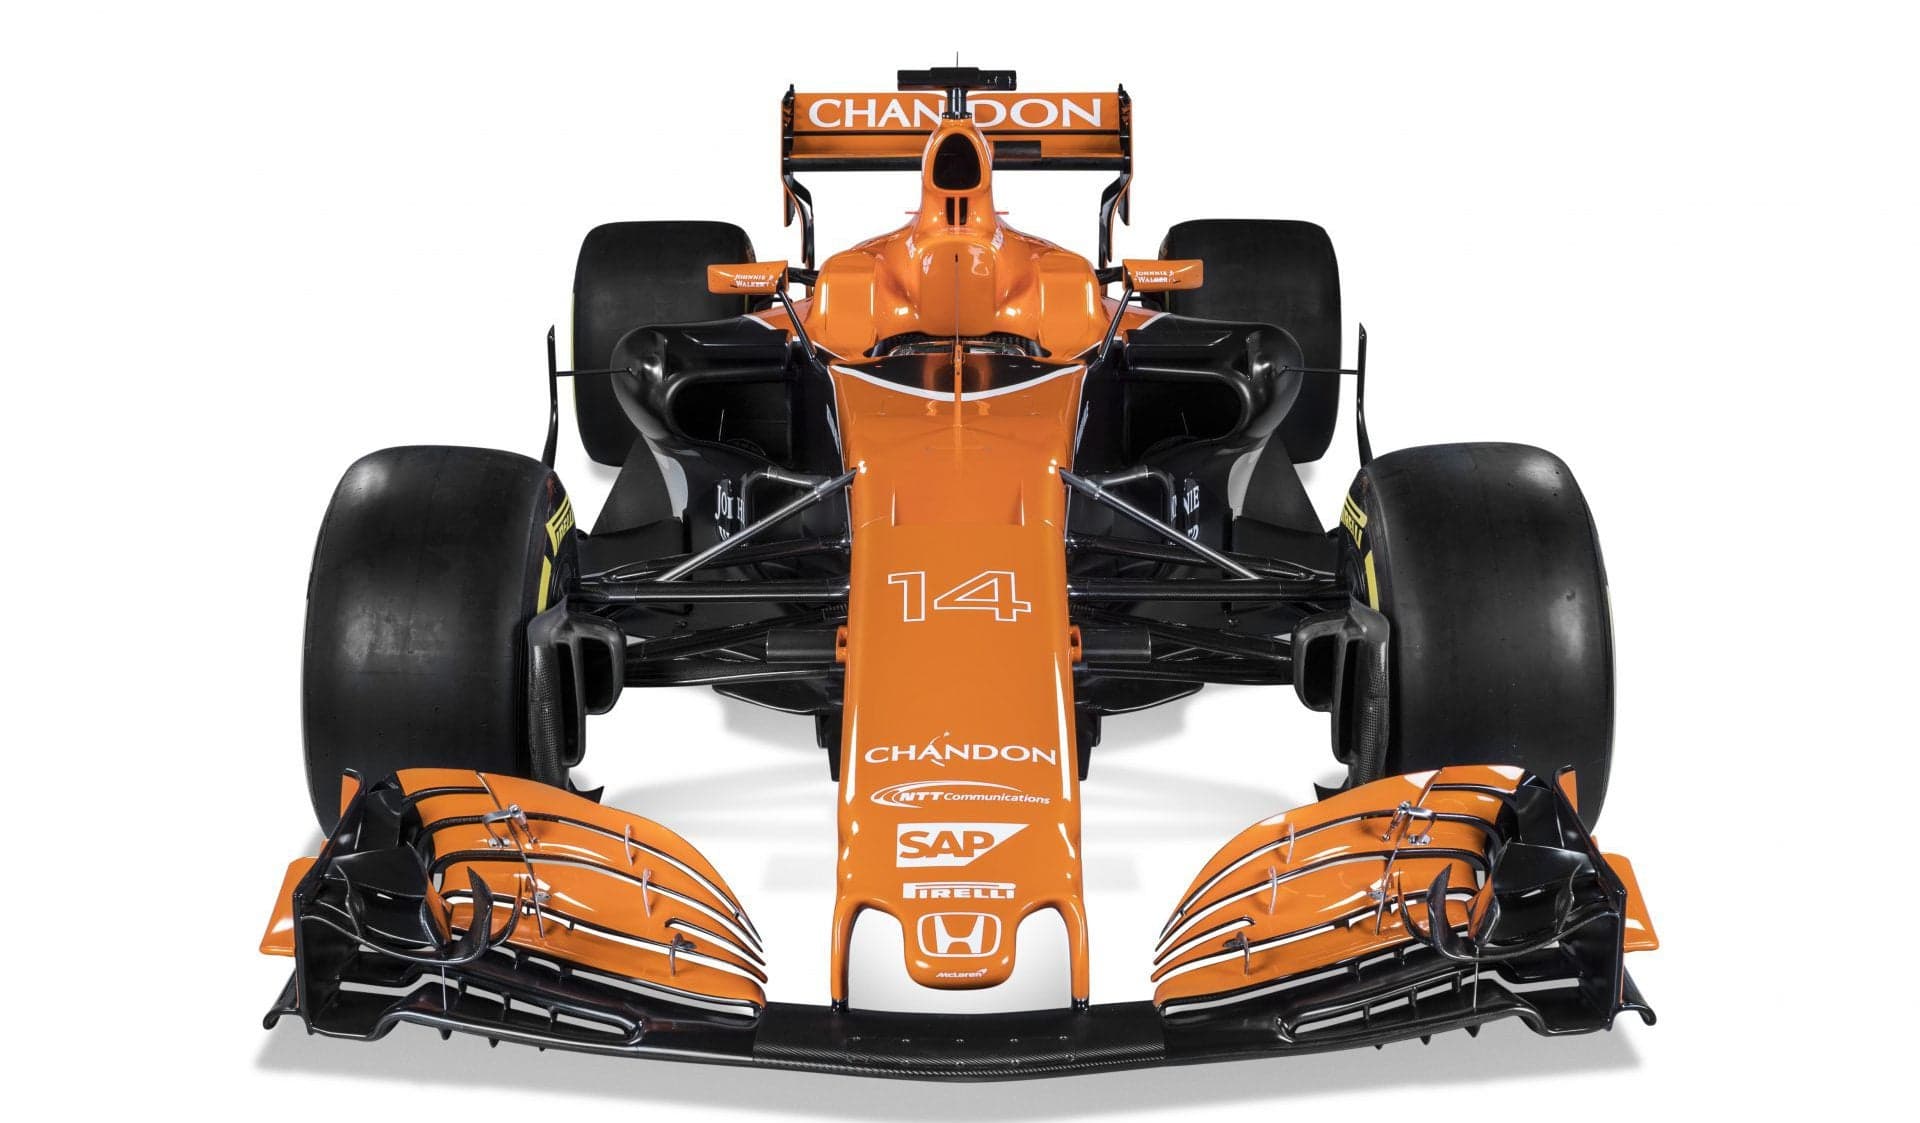 McLaren-Honda Return to Classic Orange Livery With New MCL32 Formula 1 Car